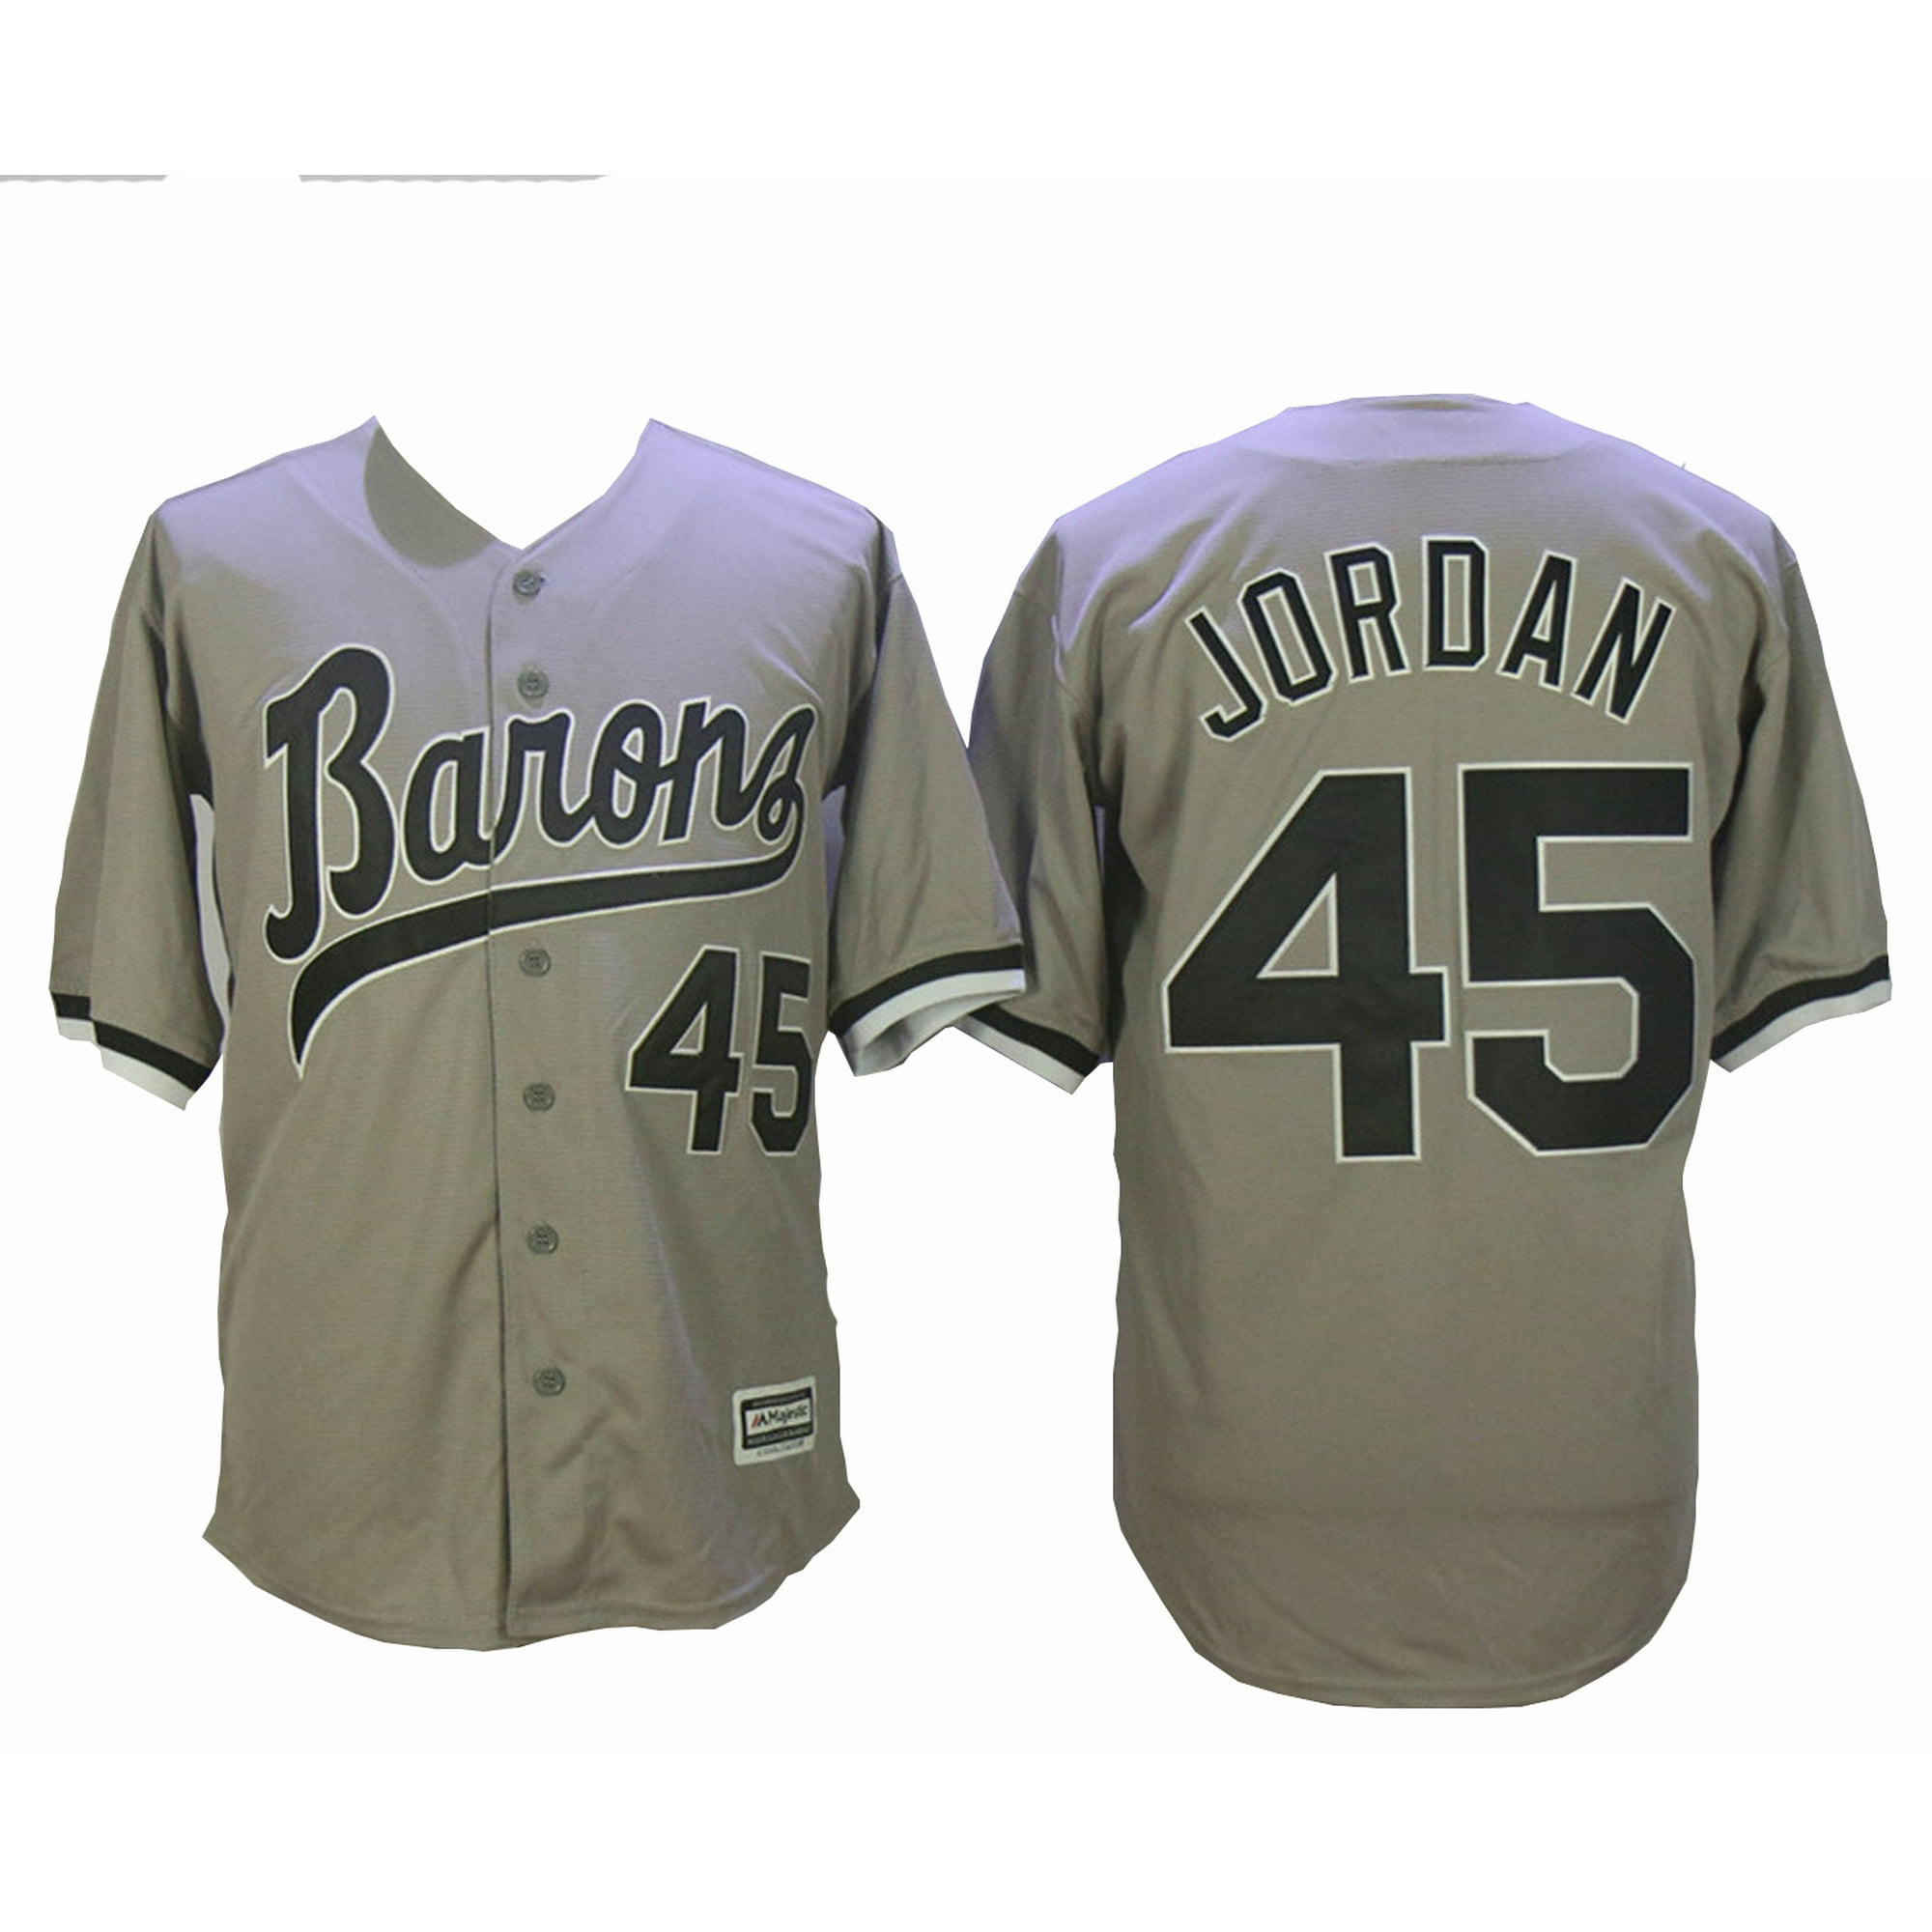 Michael Jordan 45 Barons Gray Baseball Jersey Birmingham Uniform Stitched  Gift 